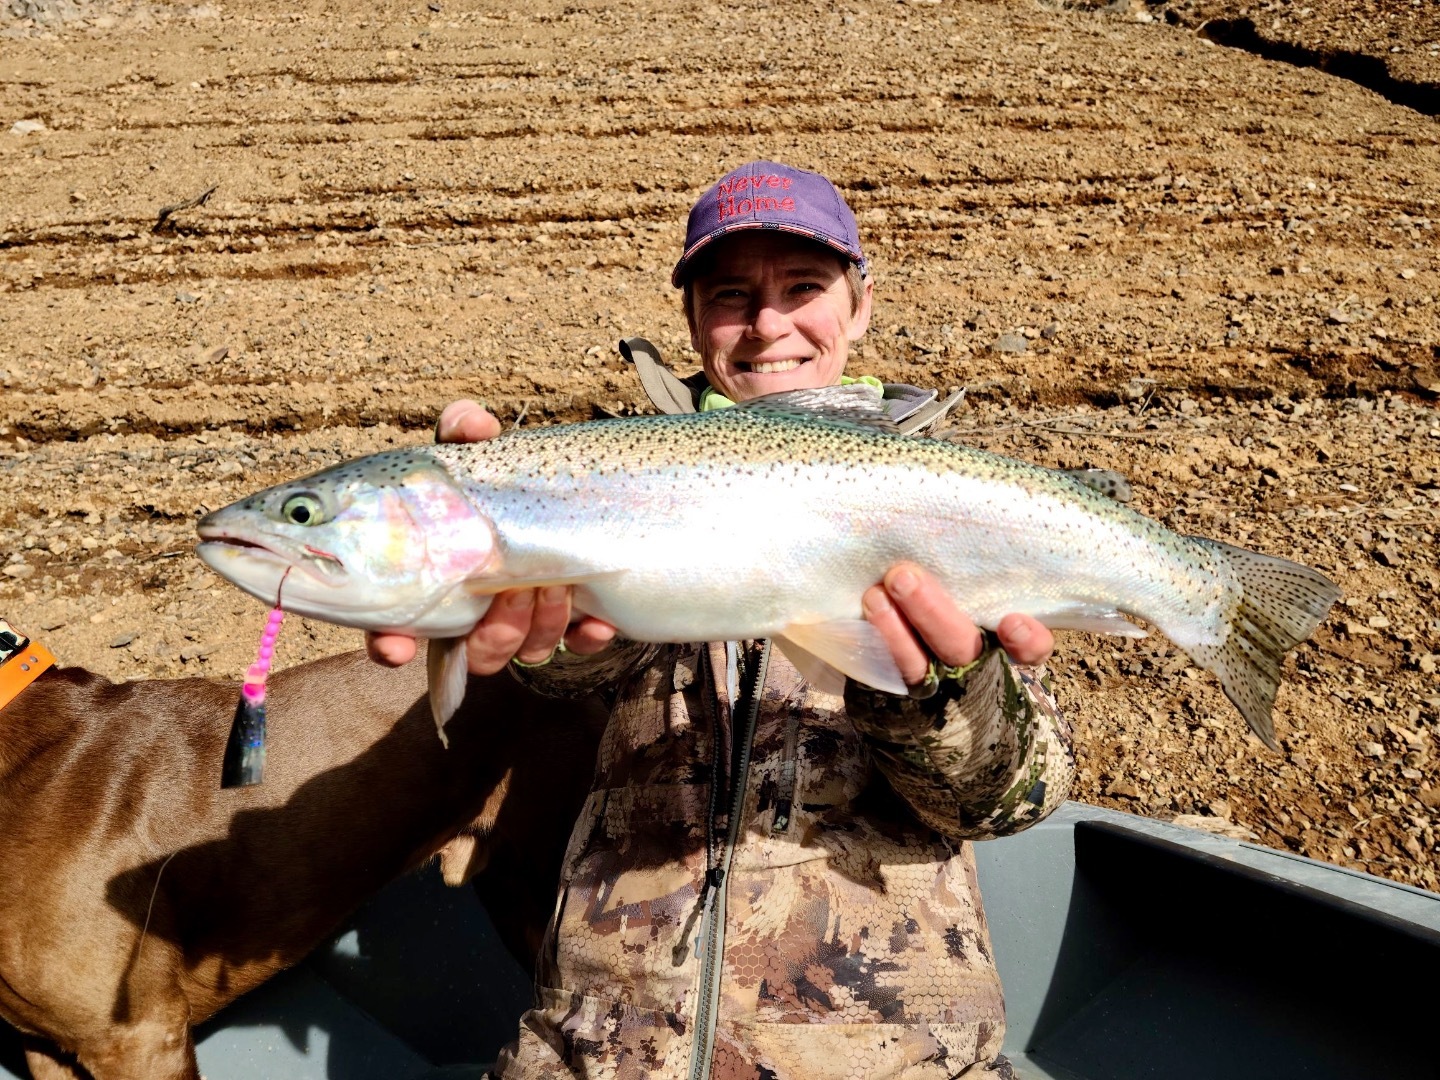 Fishing - Winter trout fishing on Shasta!